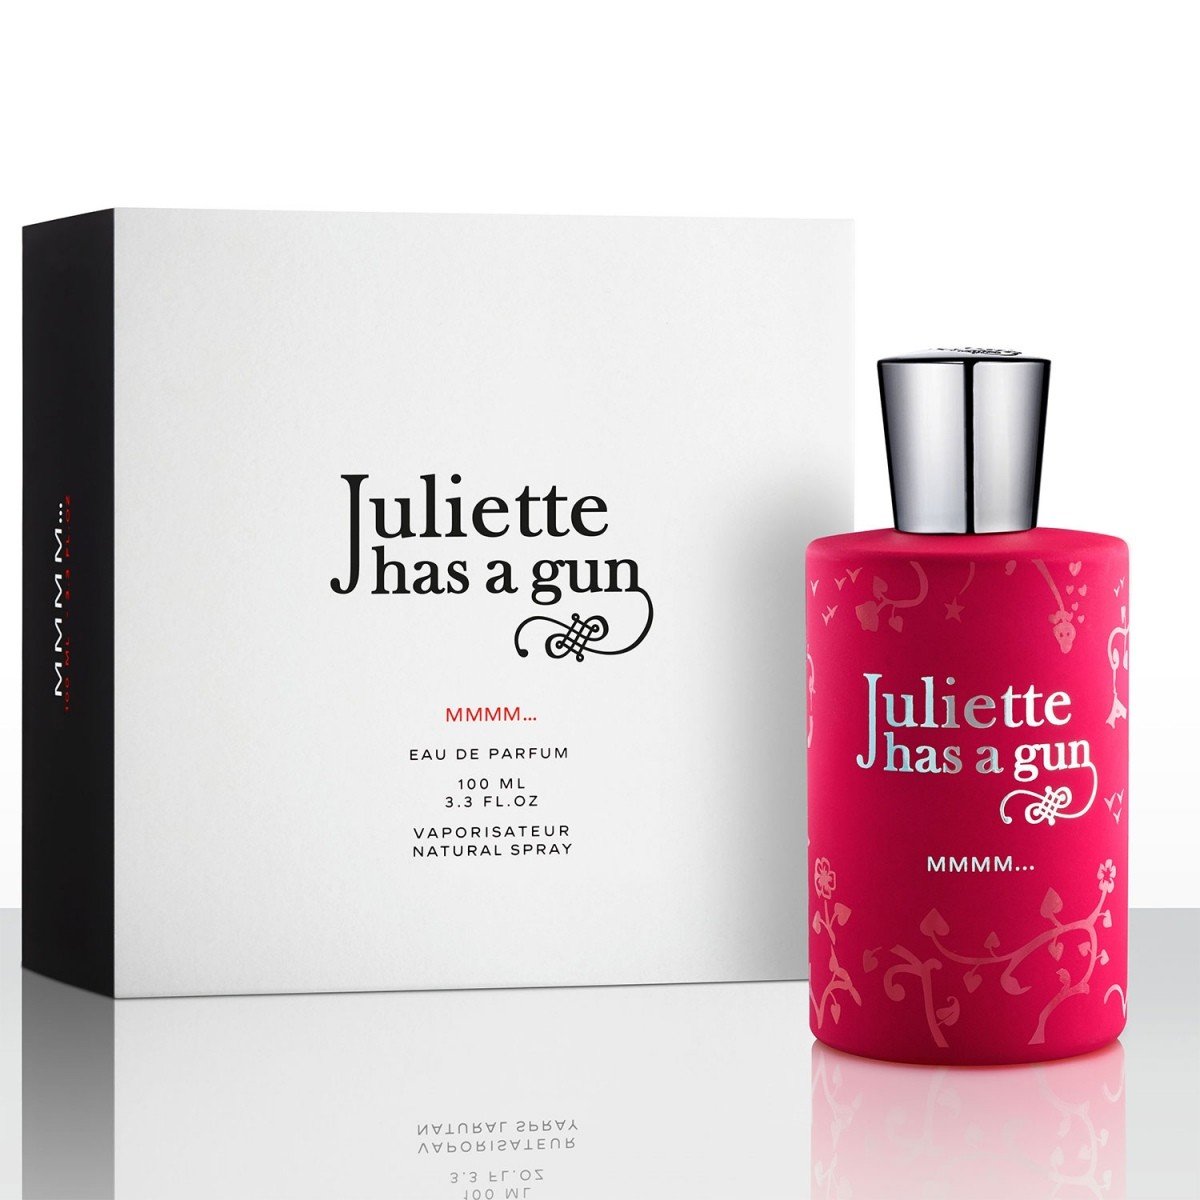 Juliette Has a Gun Mmmm… eau de parfum women xribbonline perfume fragrance shop online